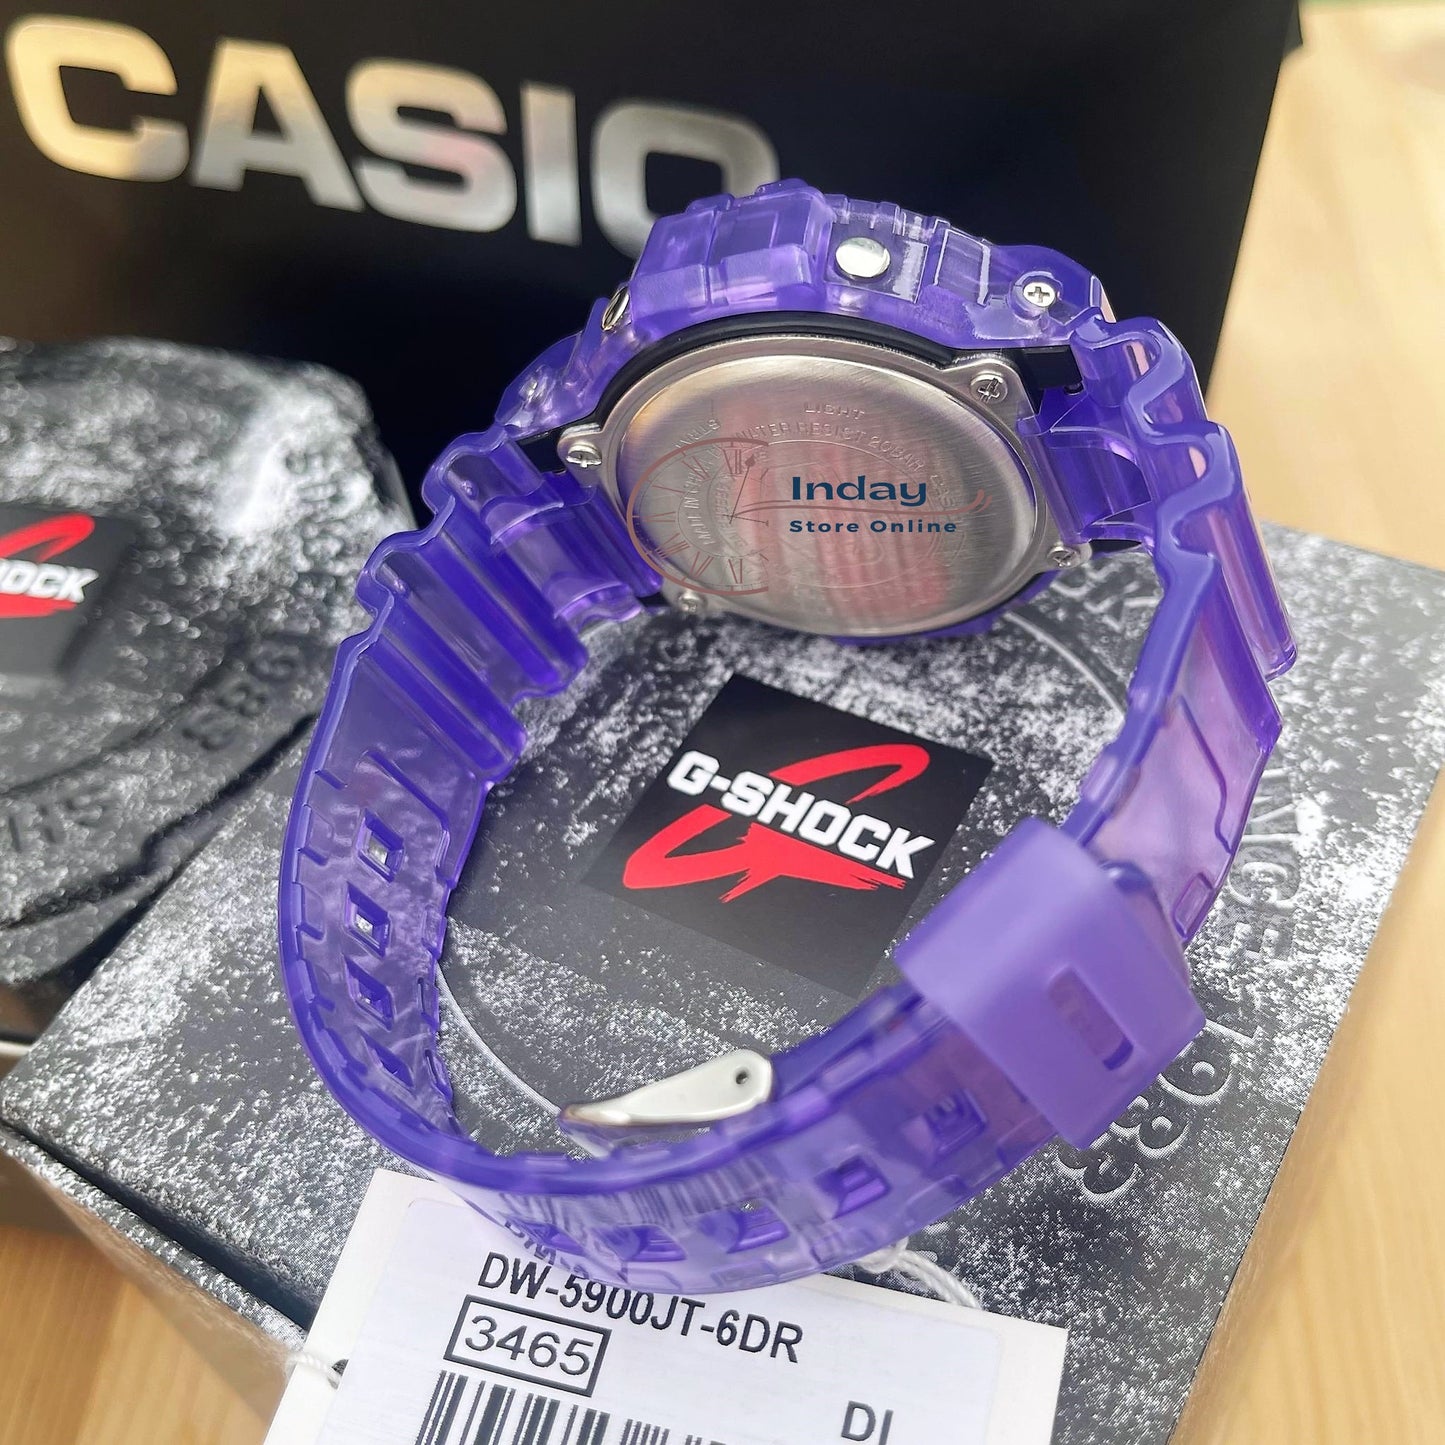 Casio G-Shock Men's Watch DW-5900JT-6 Digital 5900 Series Retro Future Translucent Vivid Colors